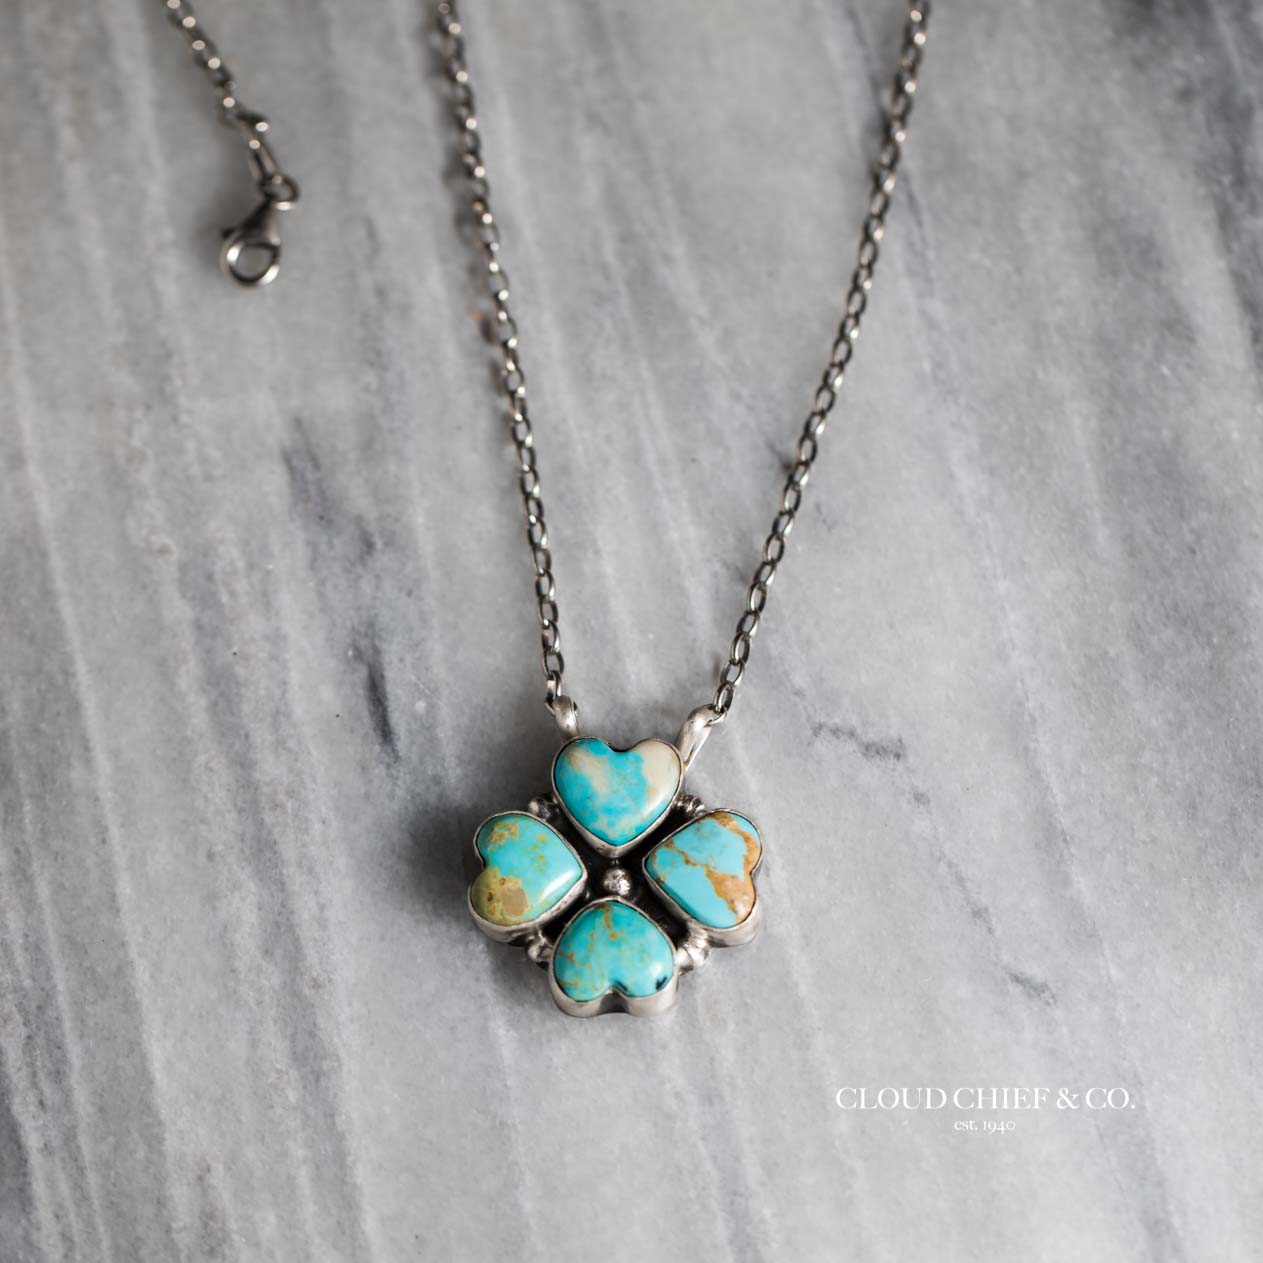 Buy Niscka Fancy Turquoise Stone Pendant Necklace Online